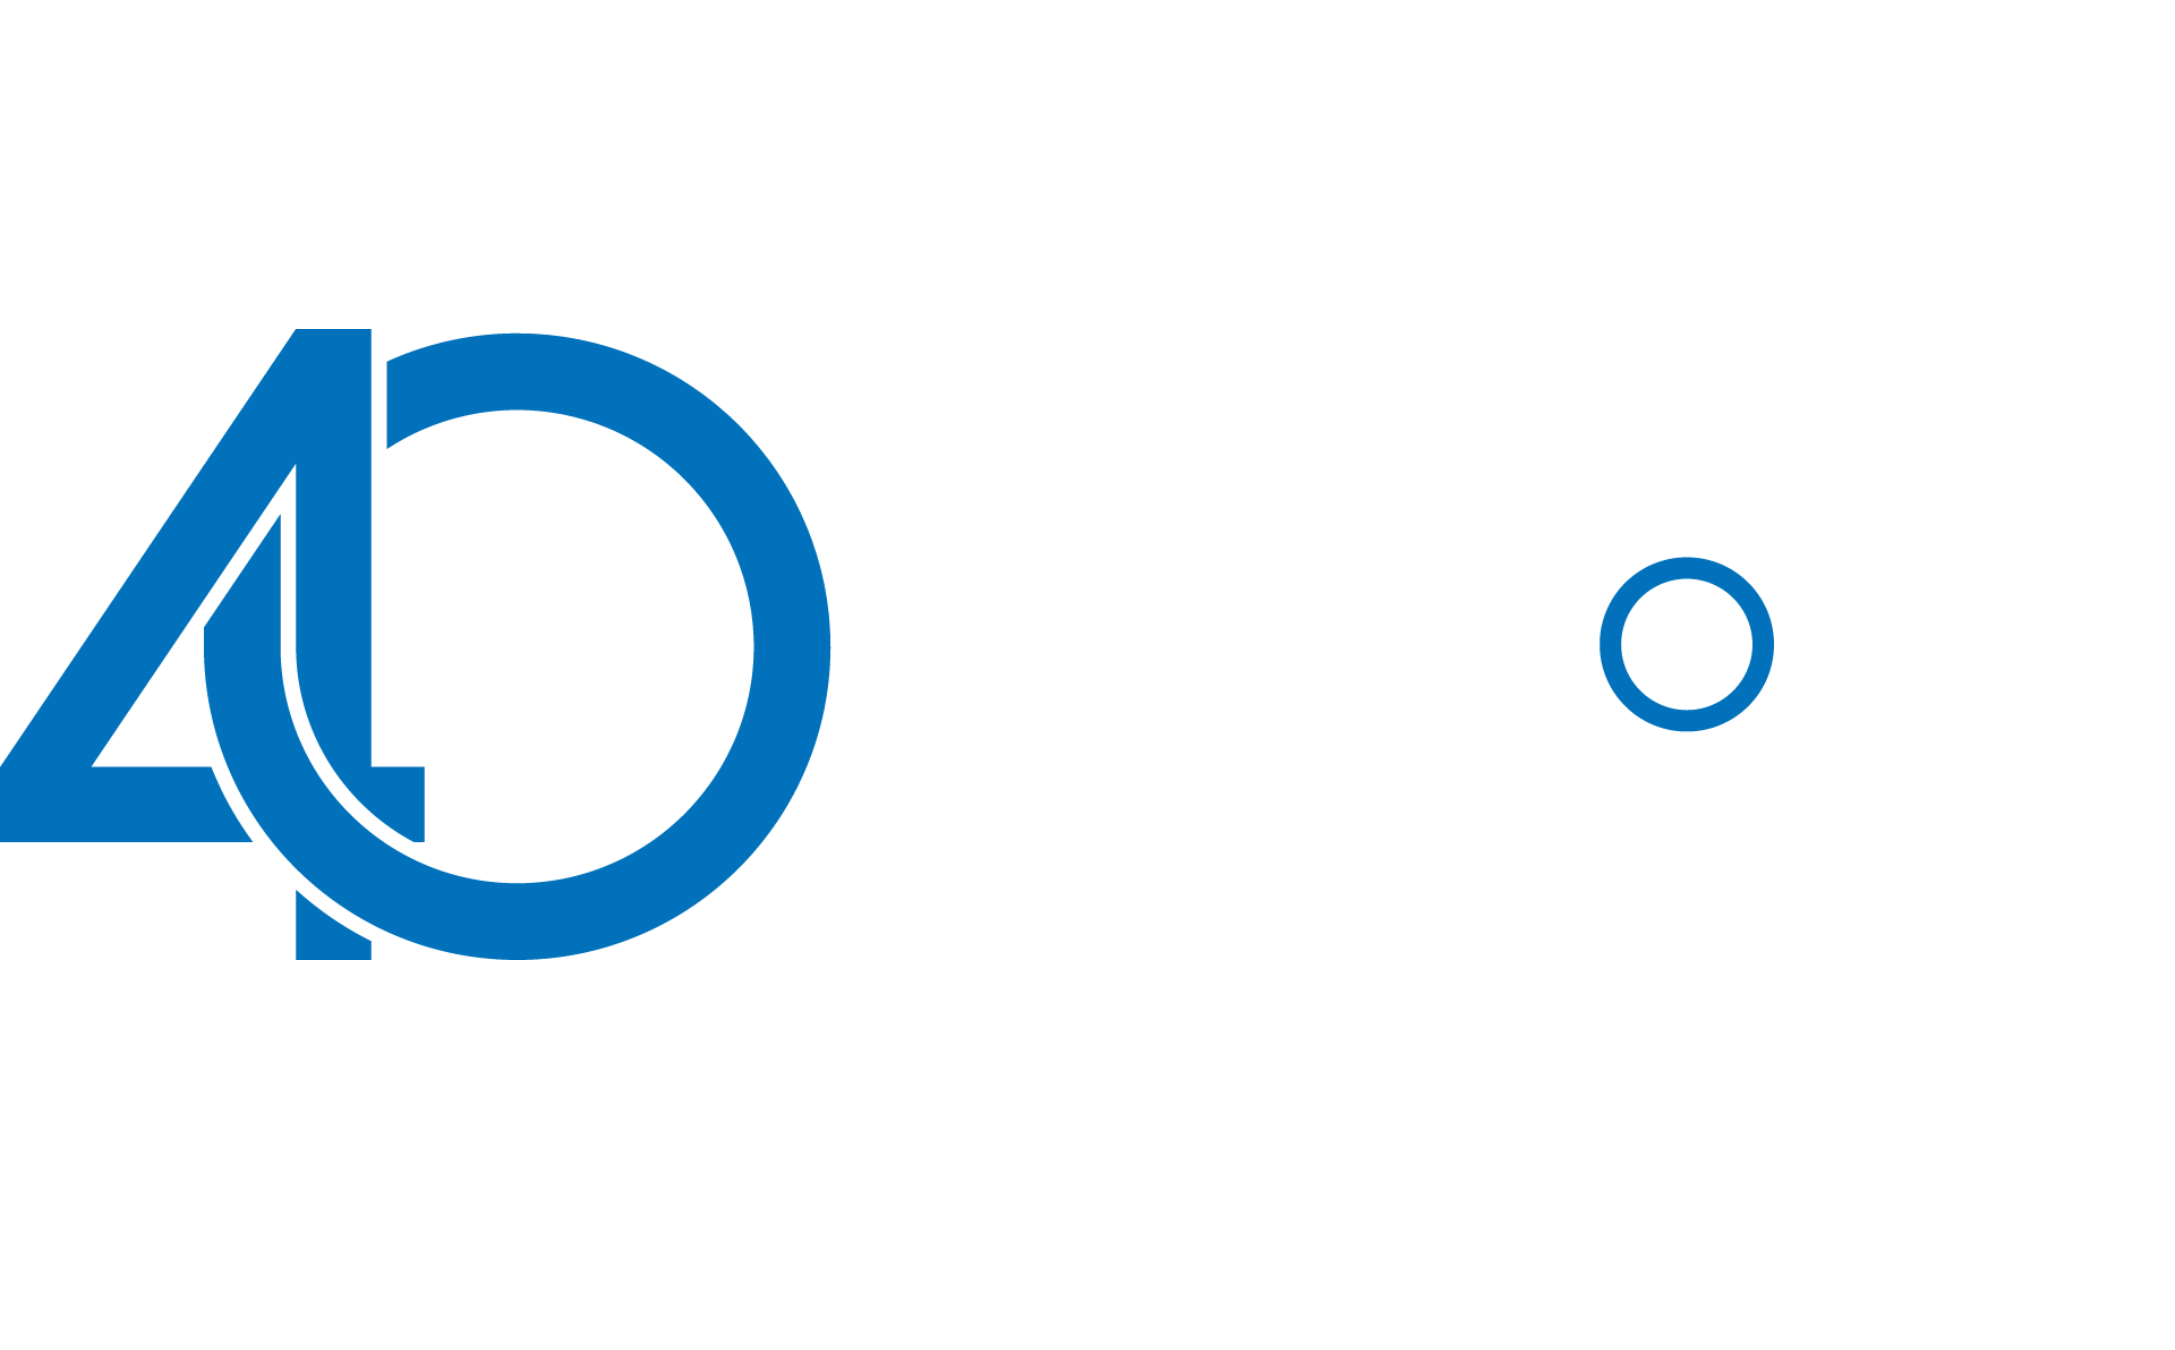 theoris-40-year-logo-white